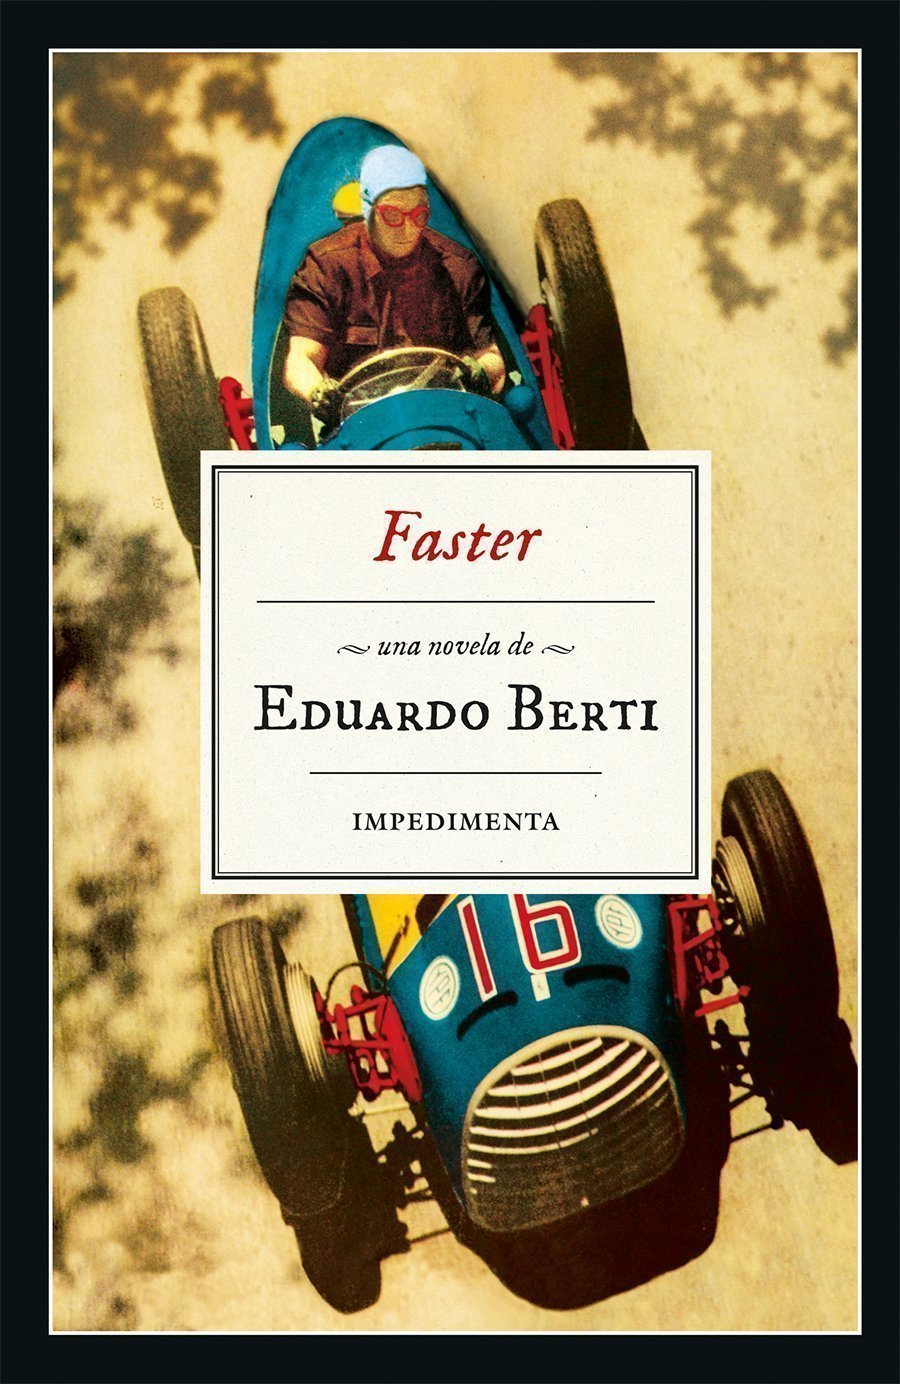 Faster, de Eduardo Berti